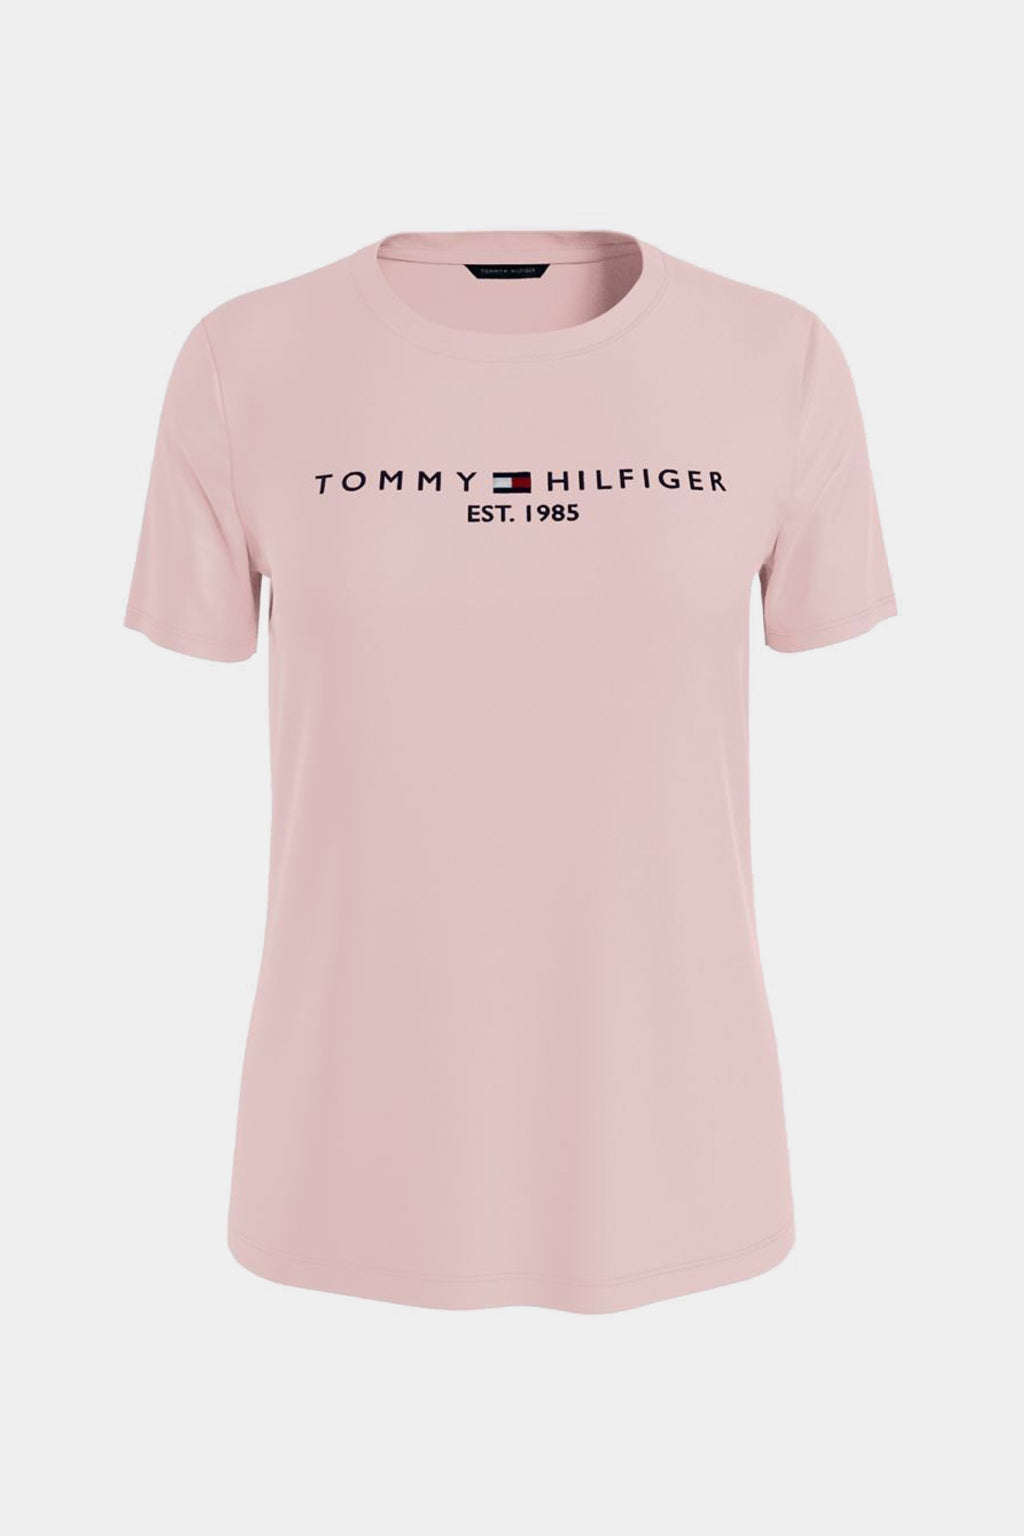 Tommy Hilfiger - Crew Neck T-Shirt